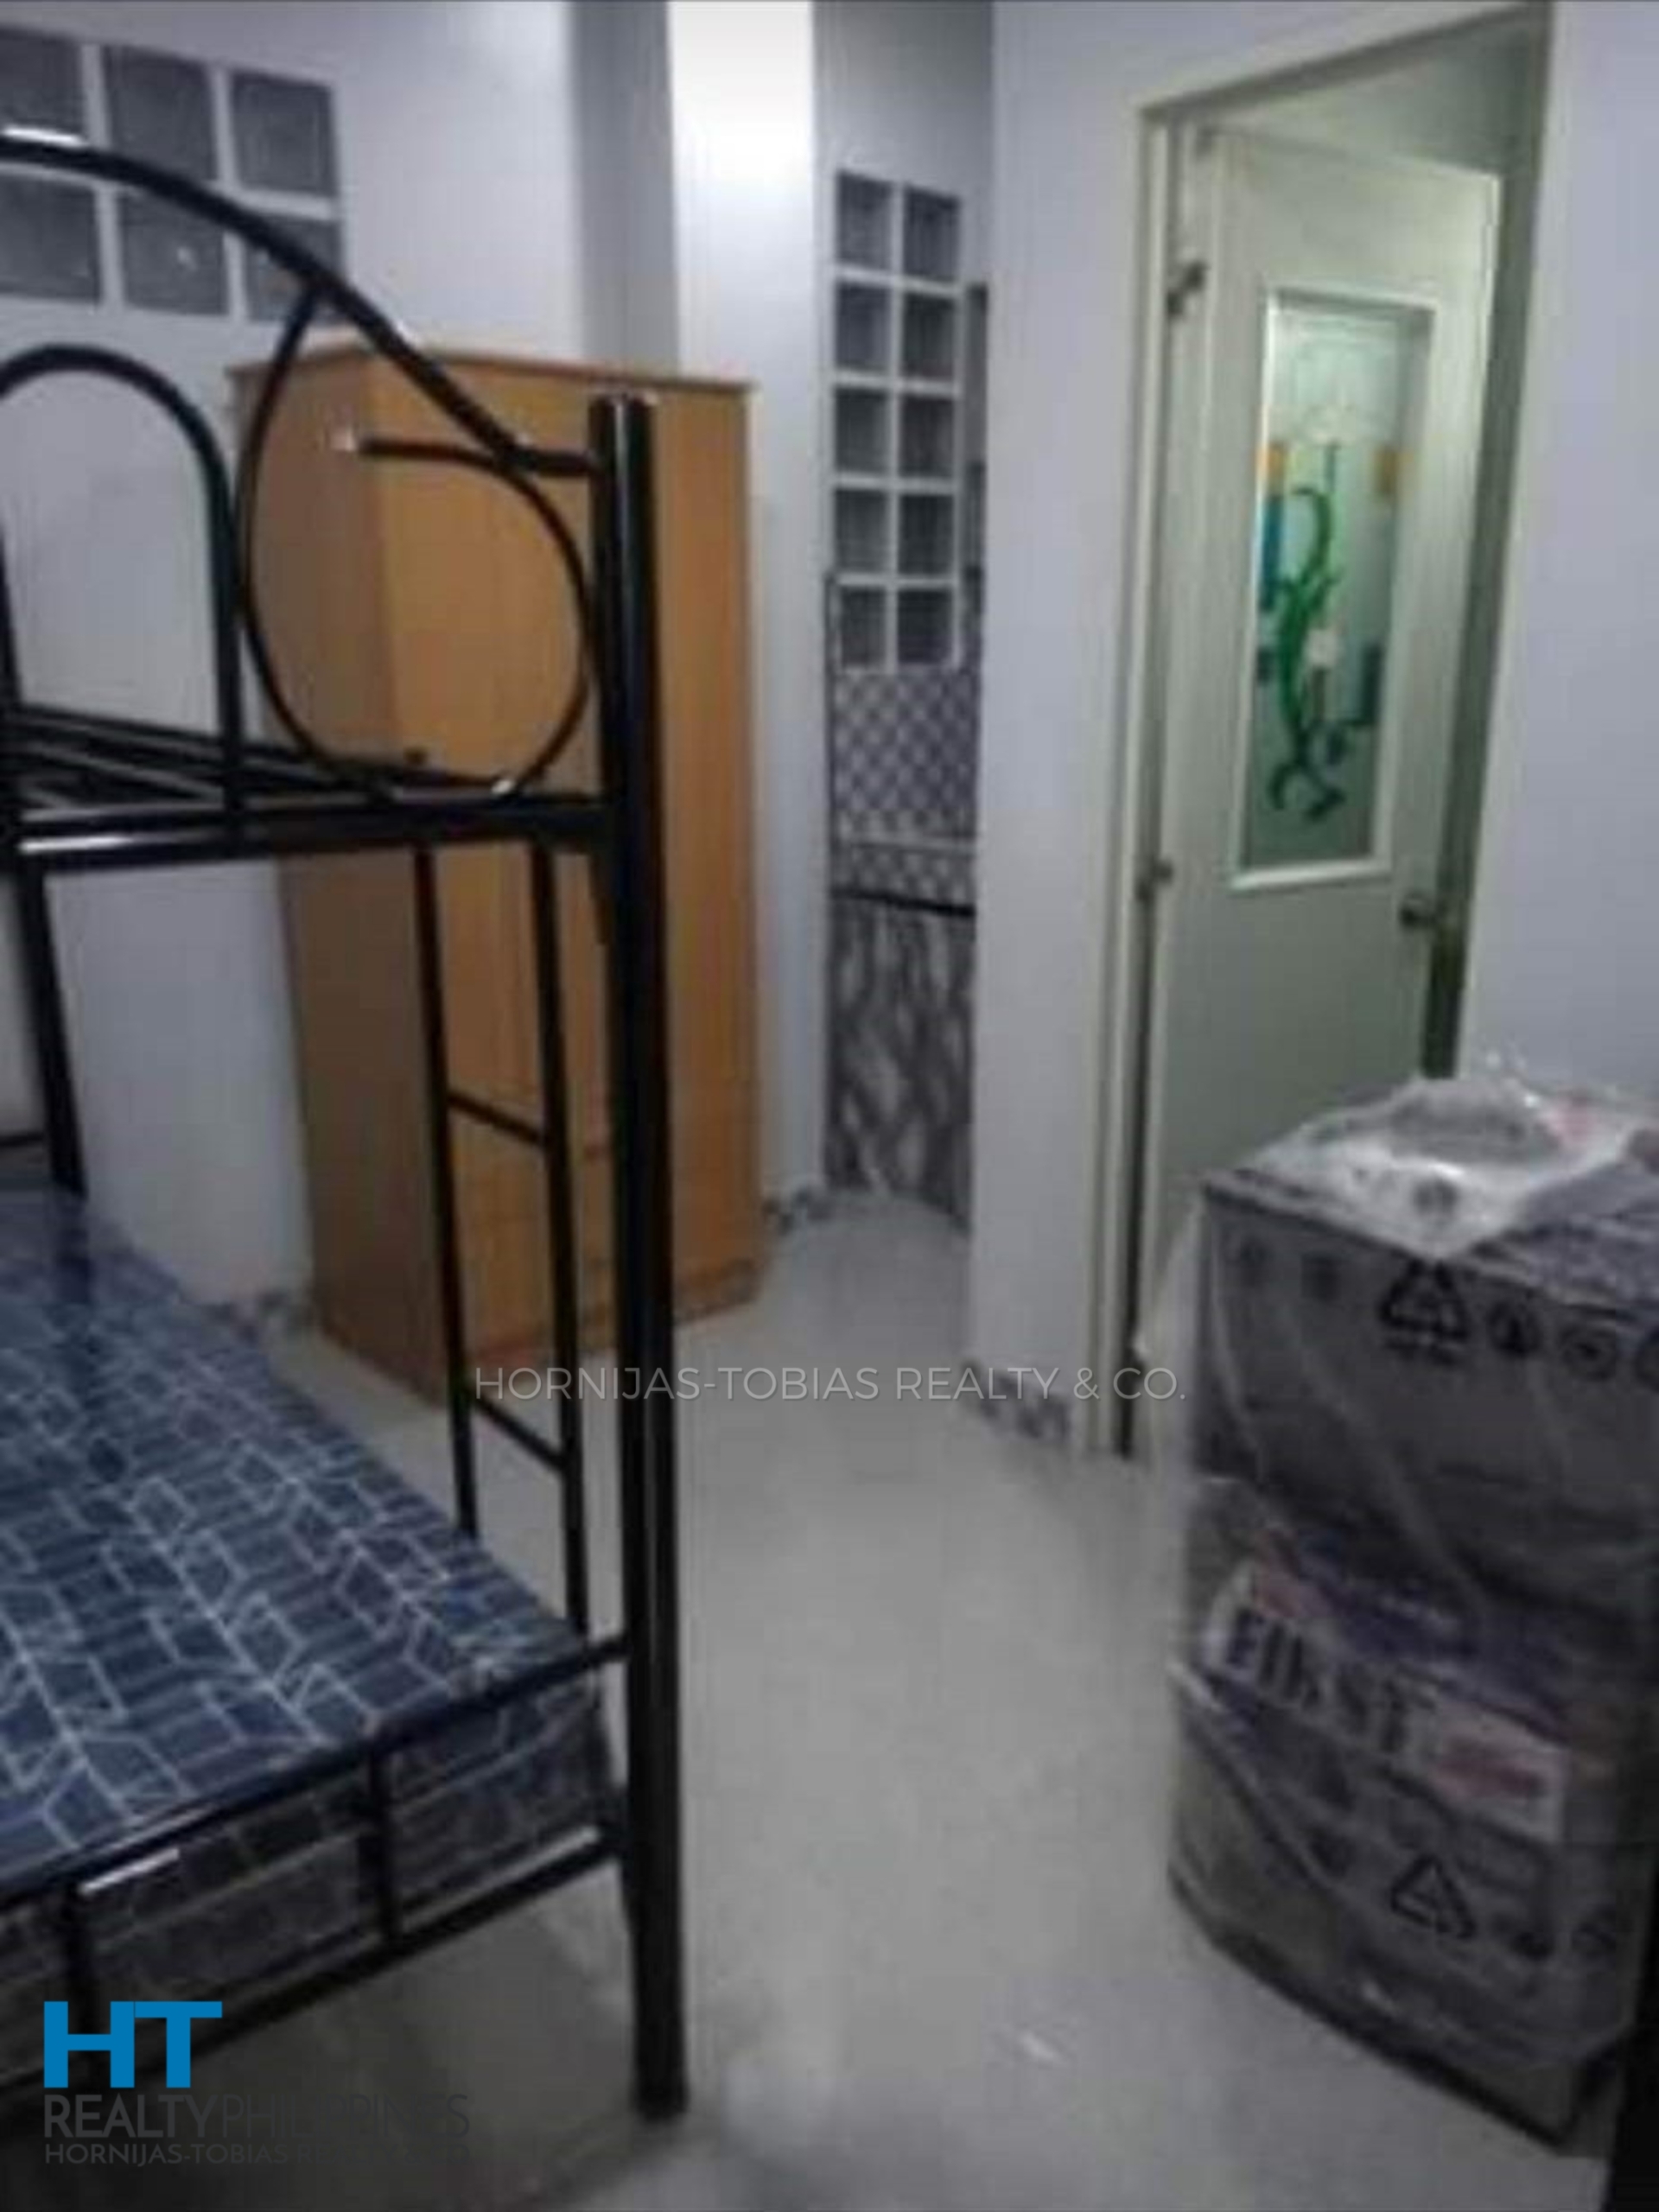 bunk bed - 12-door 4-floor income-generating apartment building for sale in Buhangin, Davao City